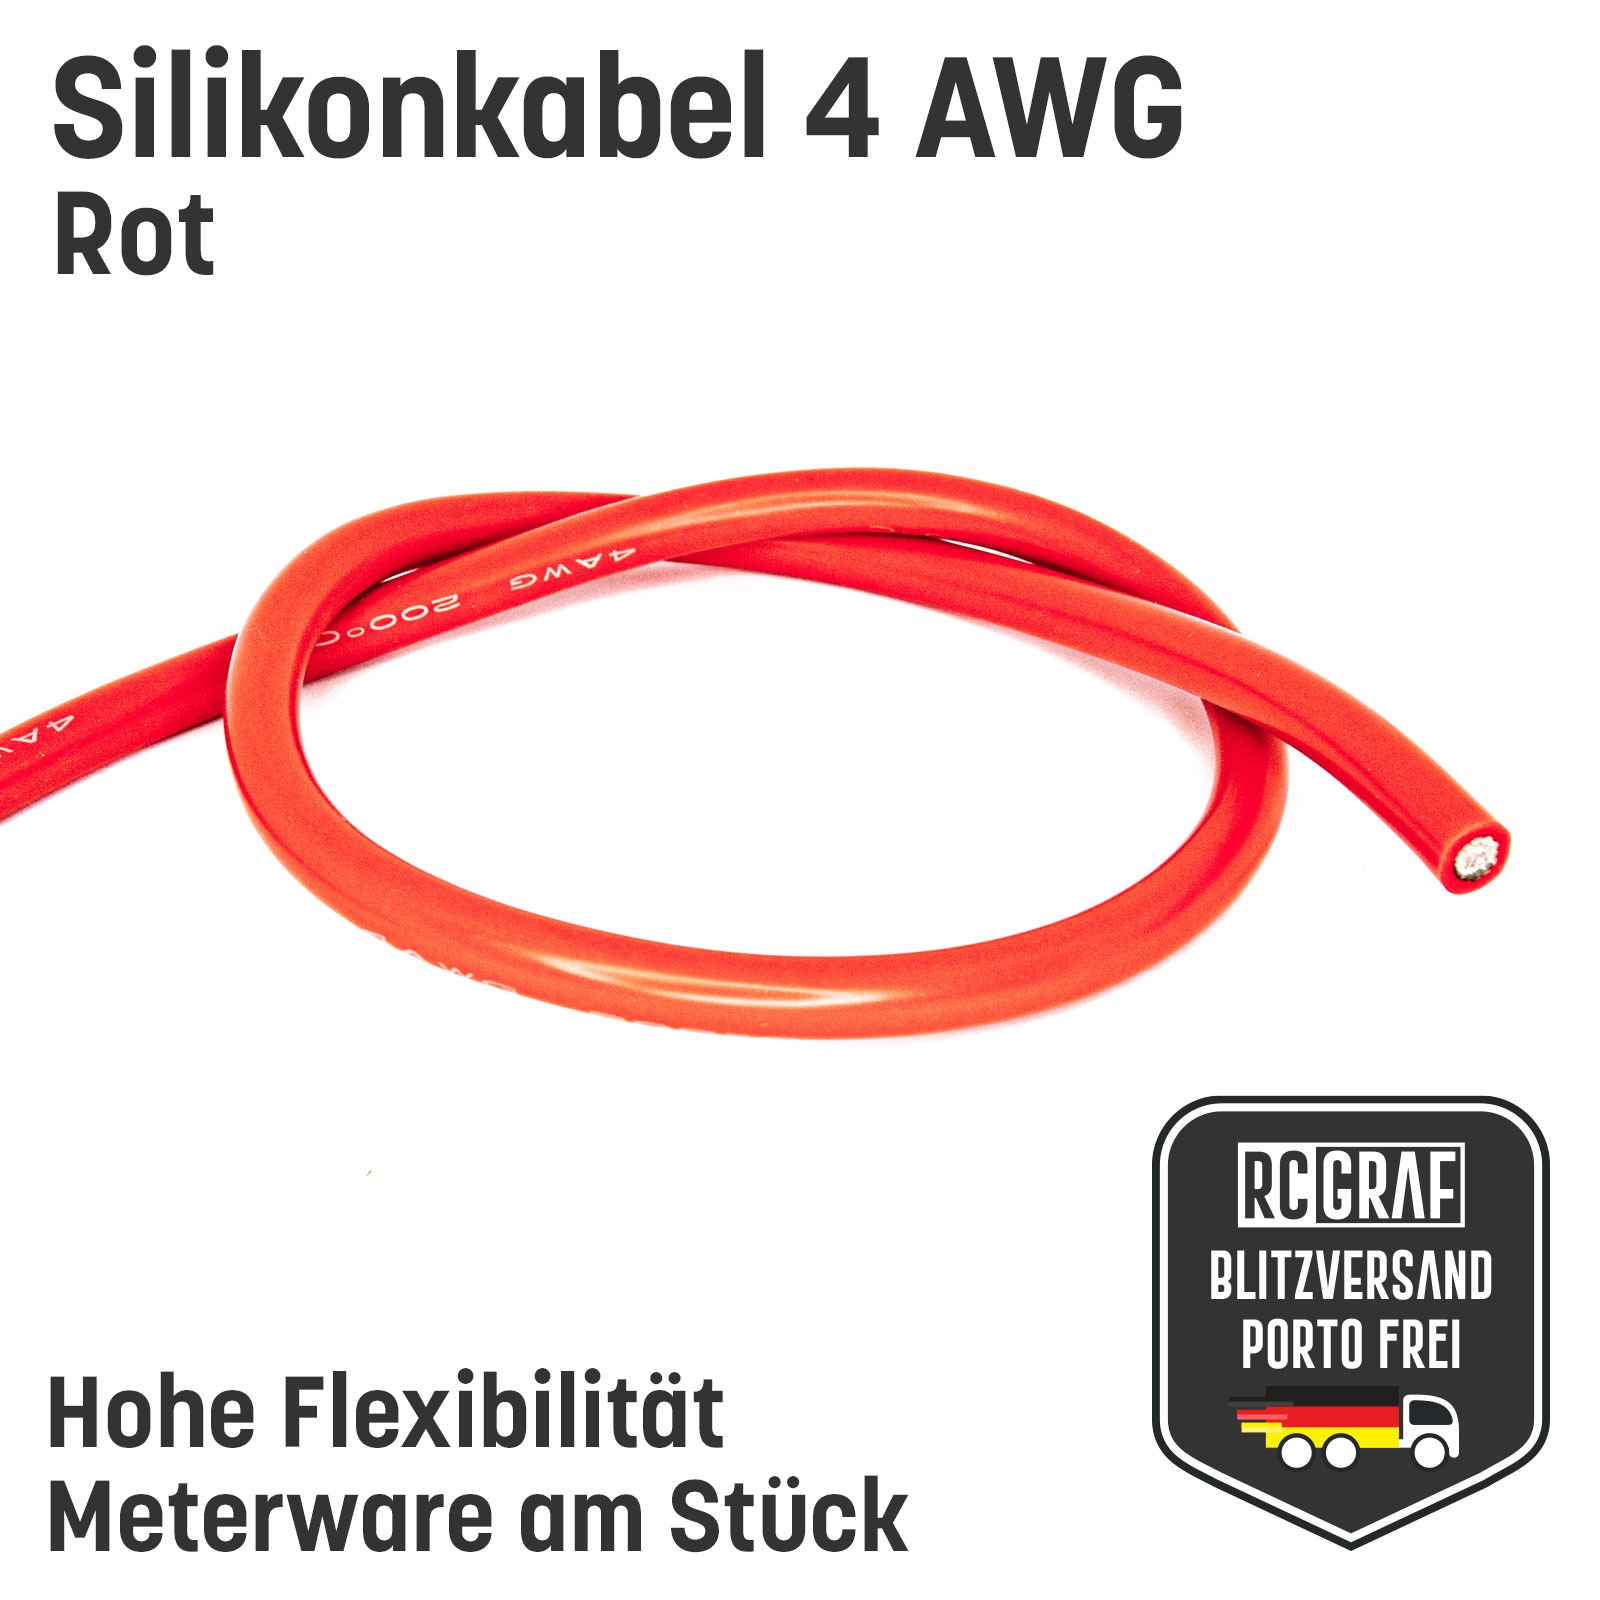 Silikonkabel 4 AWG hochflexibel Rot Schwarz Kupfer RC Kabel 3